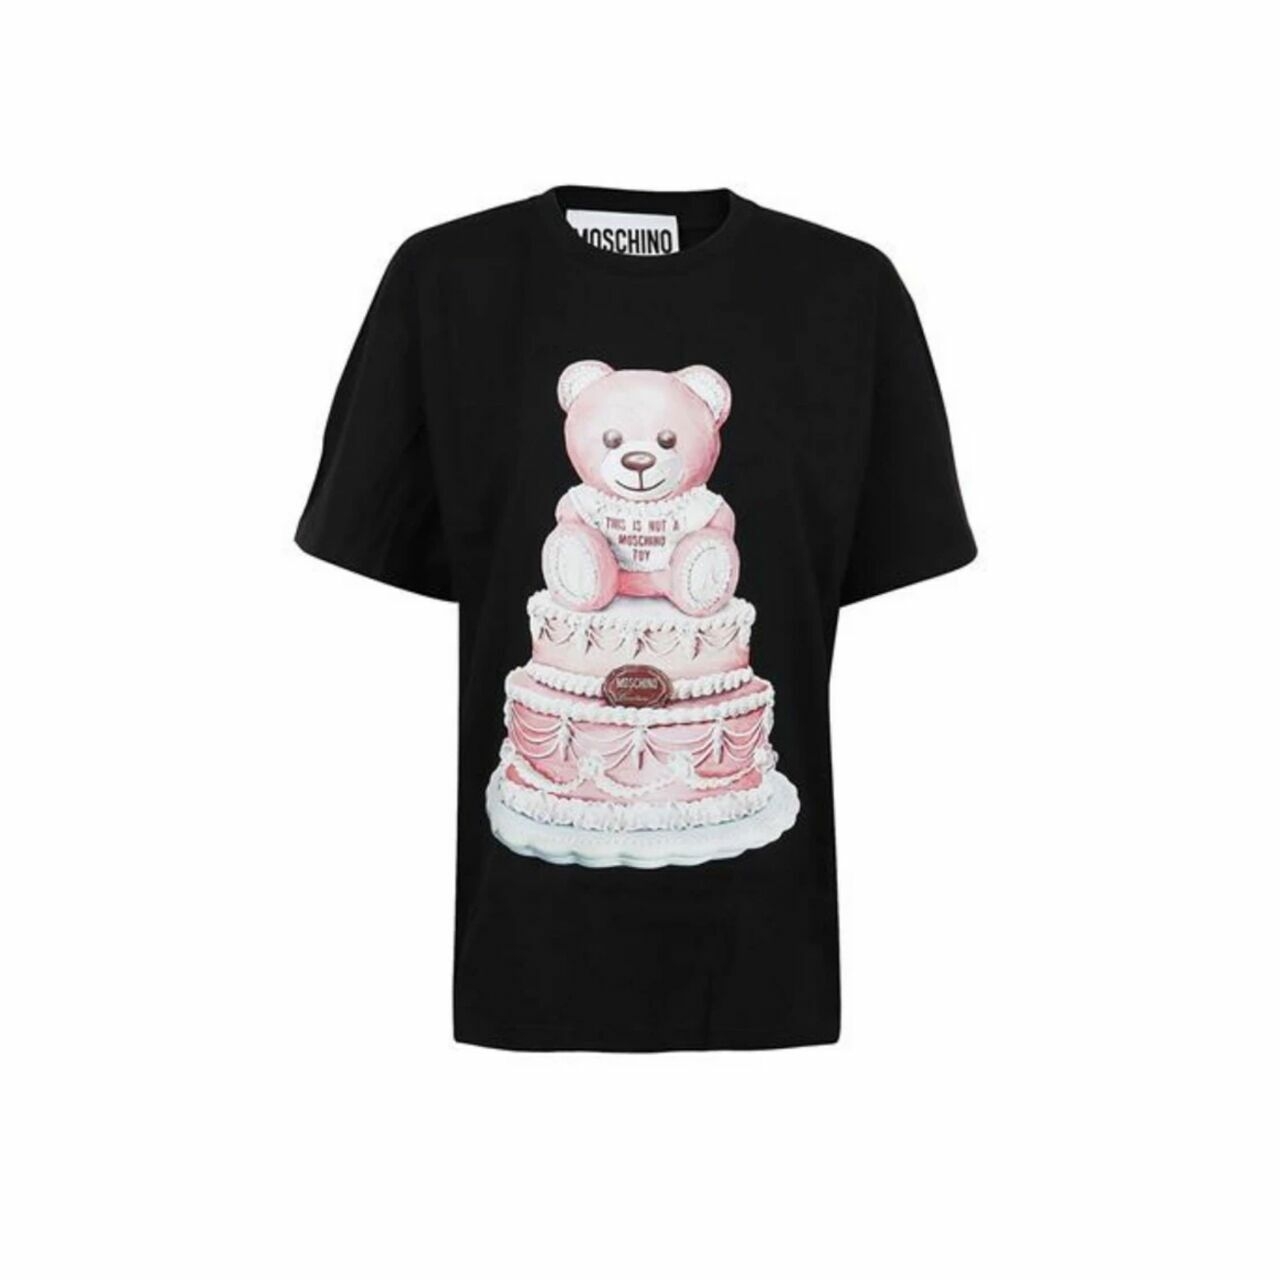 Moschino Black Cake Teddy Bear print T-Shirt